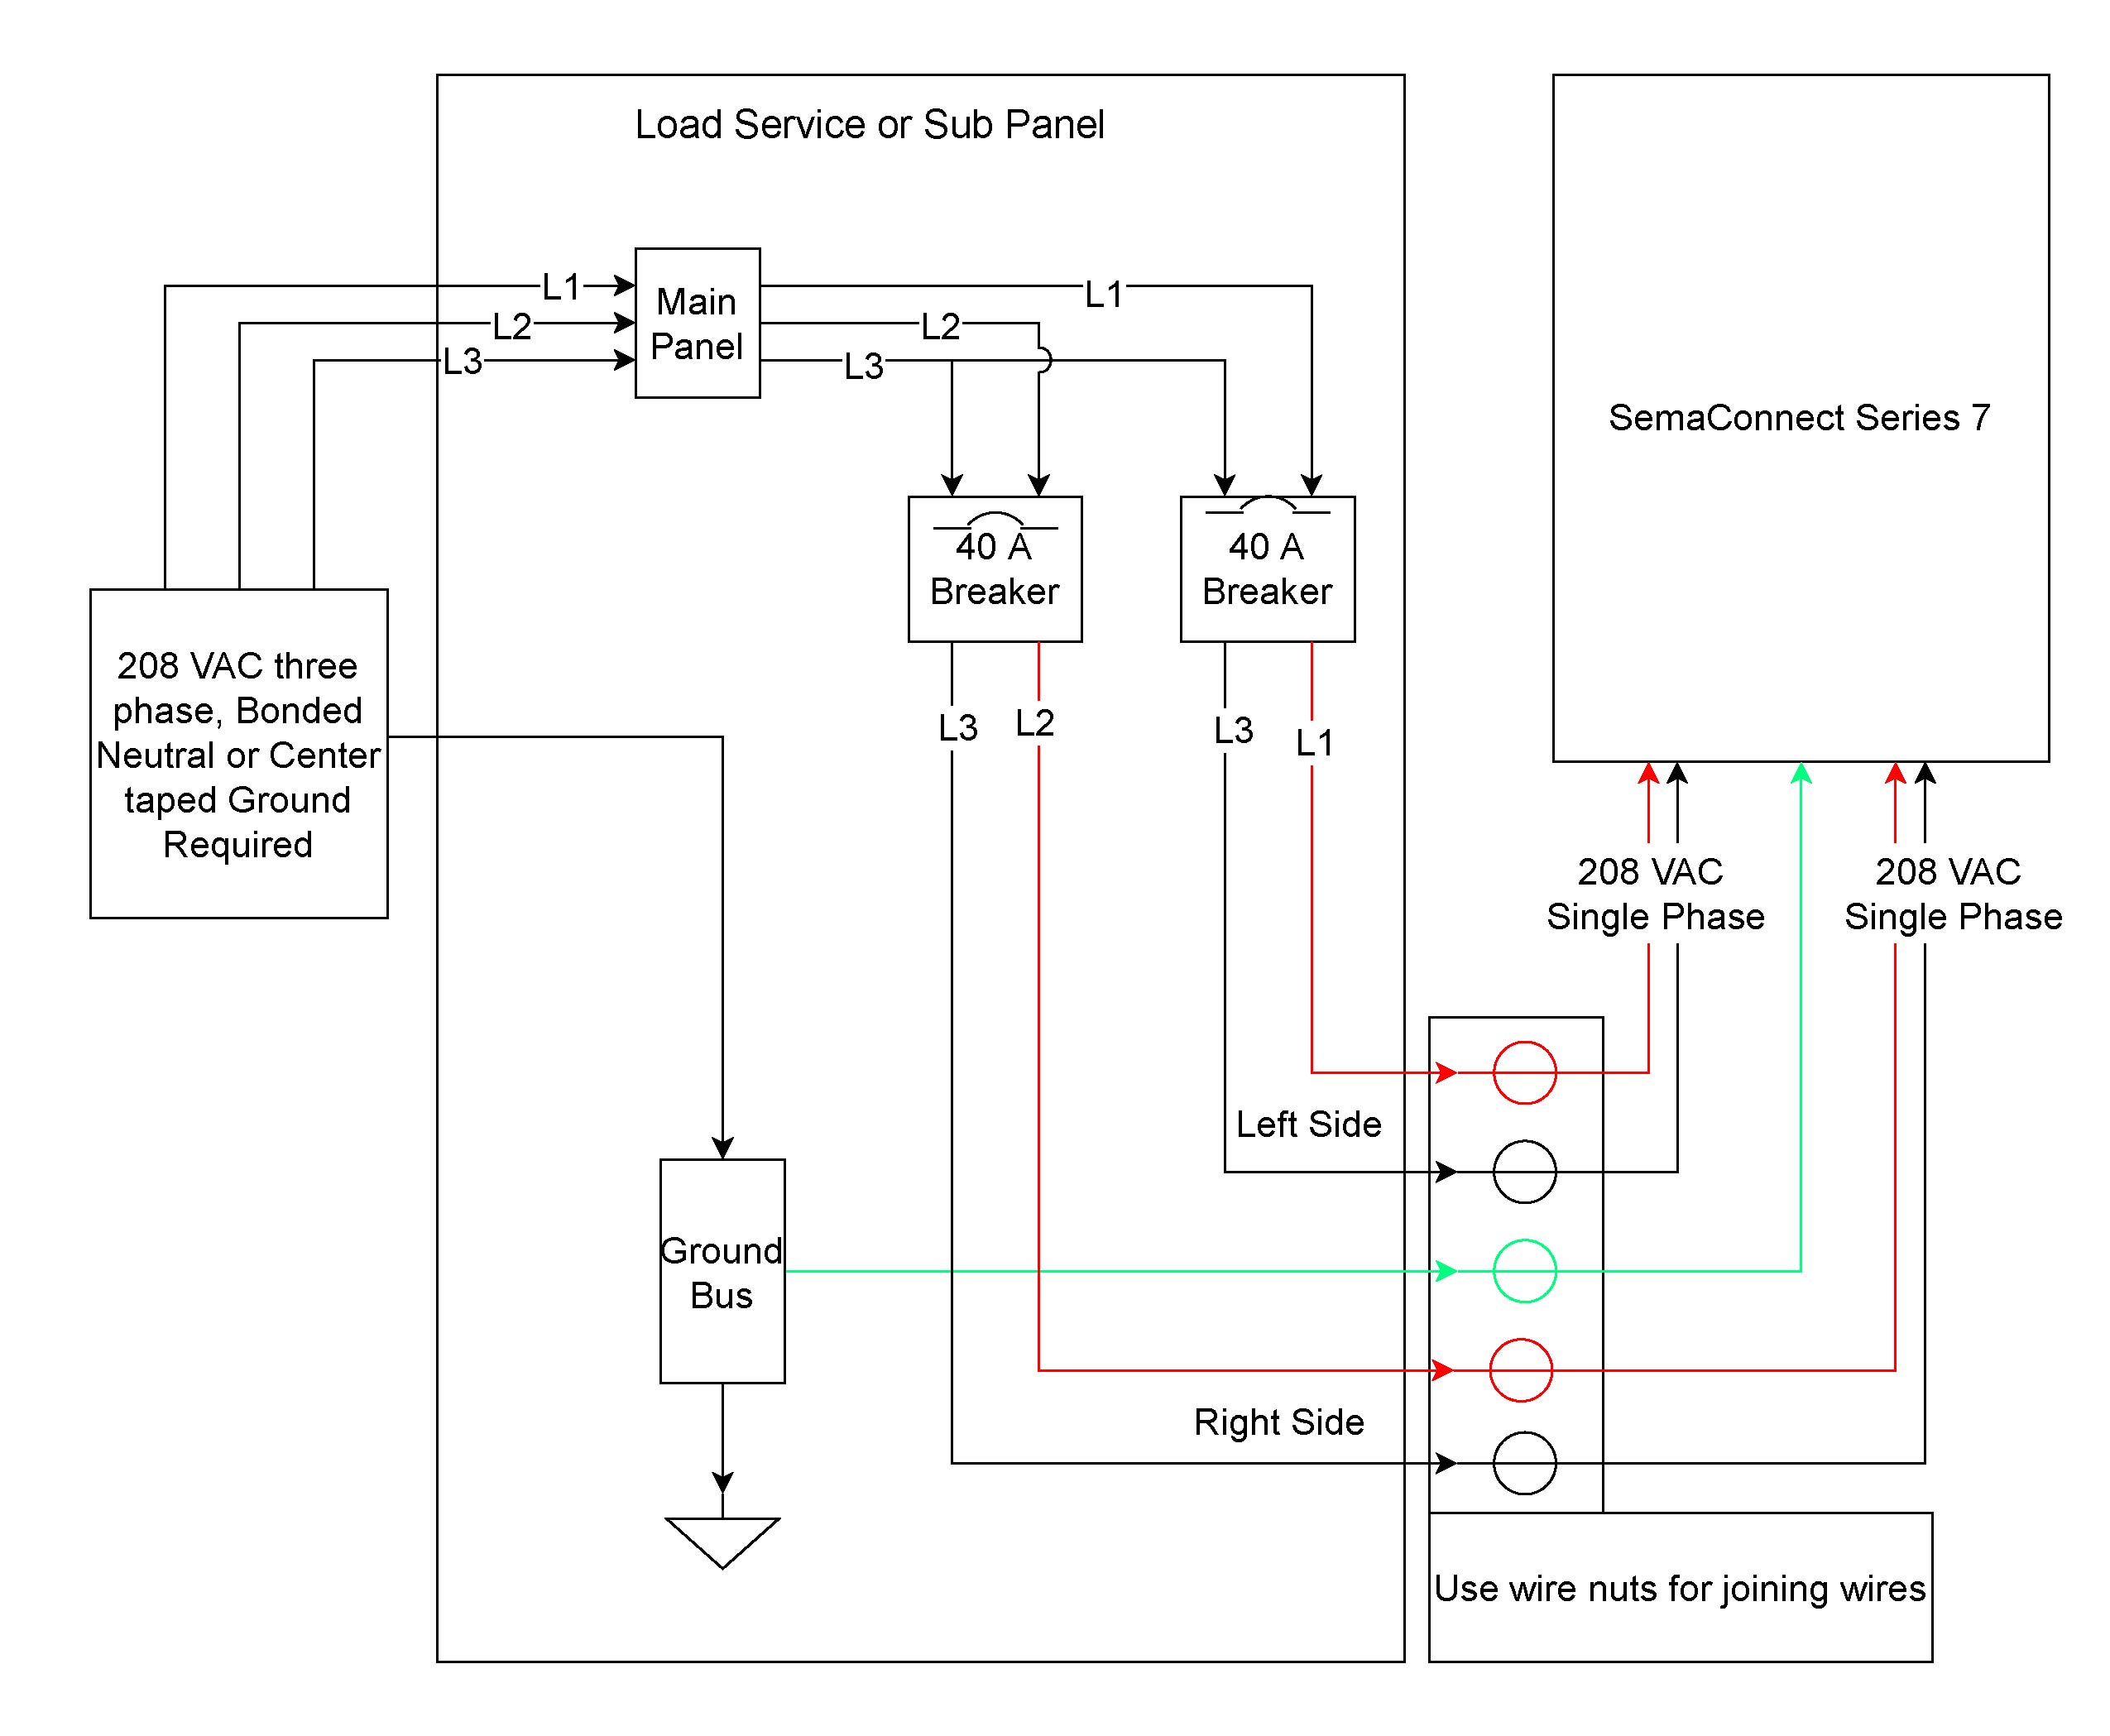 tgcl-153p wiring diagram